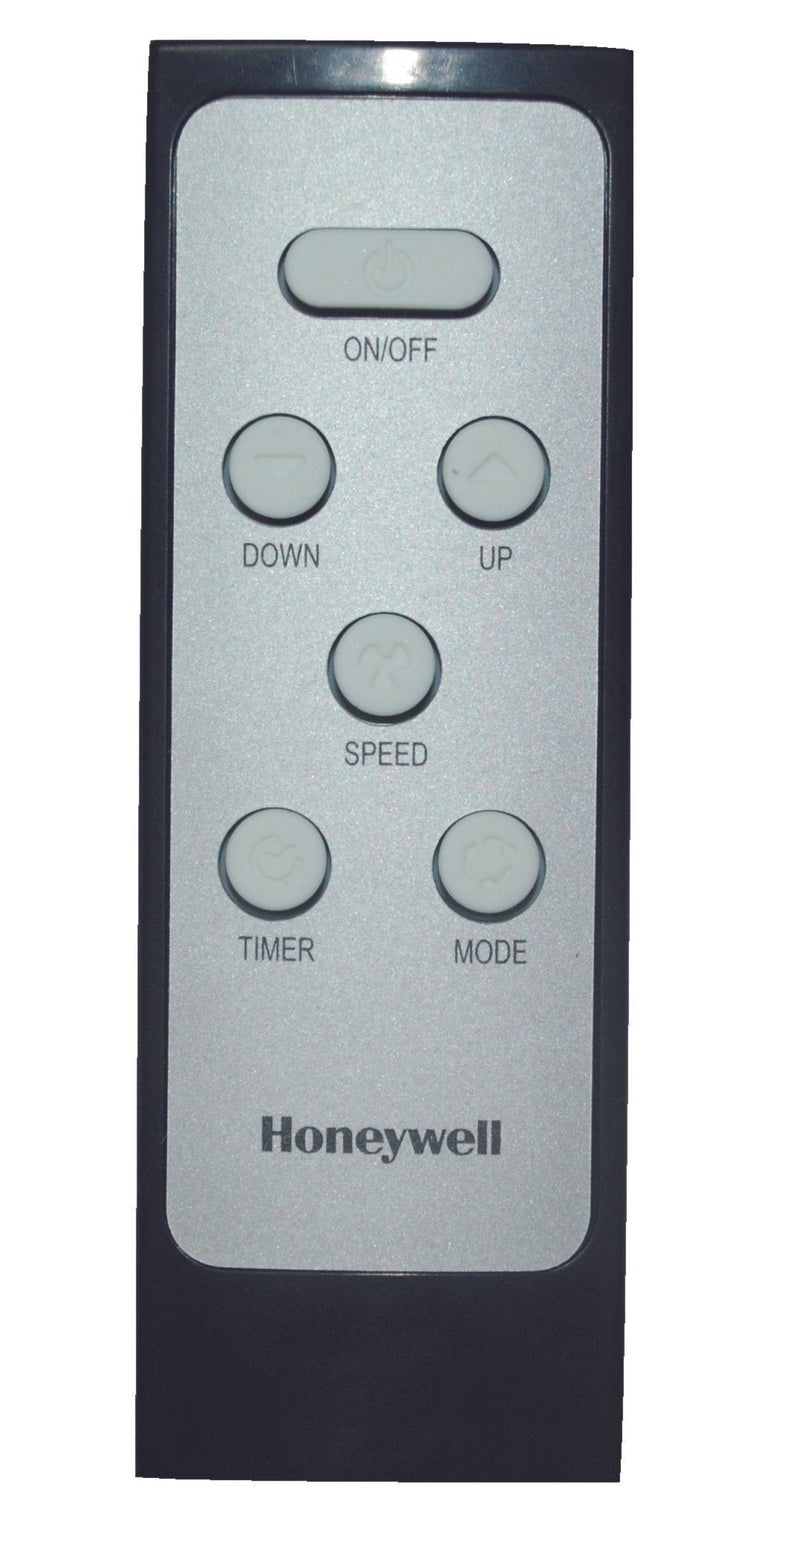 Honeywell MO08CESWK6 8000 BTU 350 sq. ft. 3-in-1 Quiet Portable Air Conditioner, White/Black Portable Air Conditioner Honeywell 